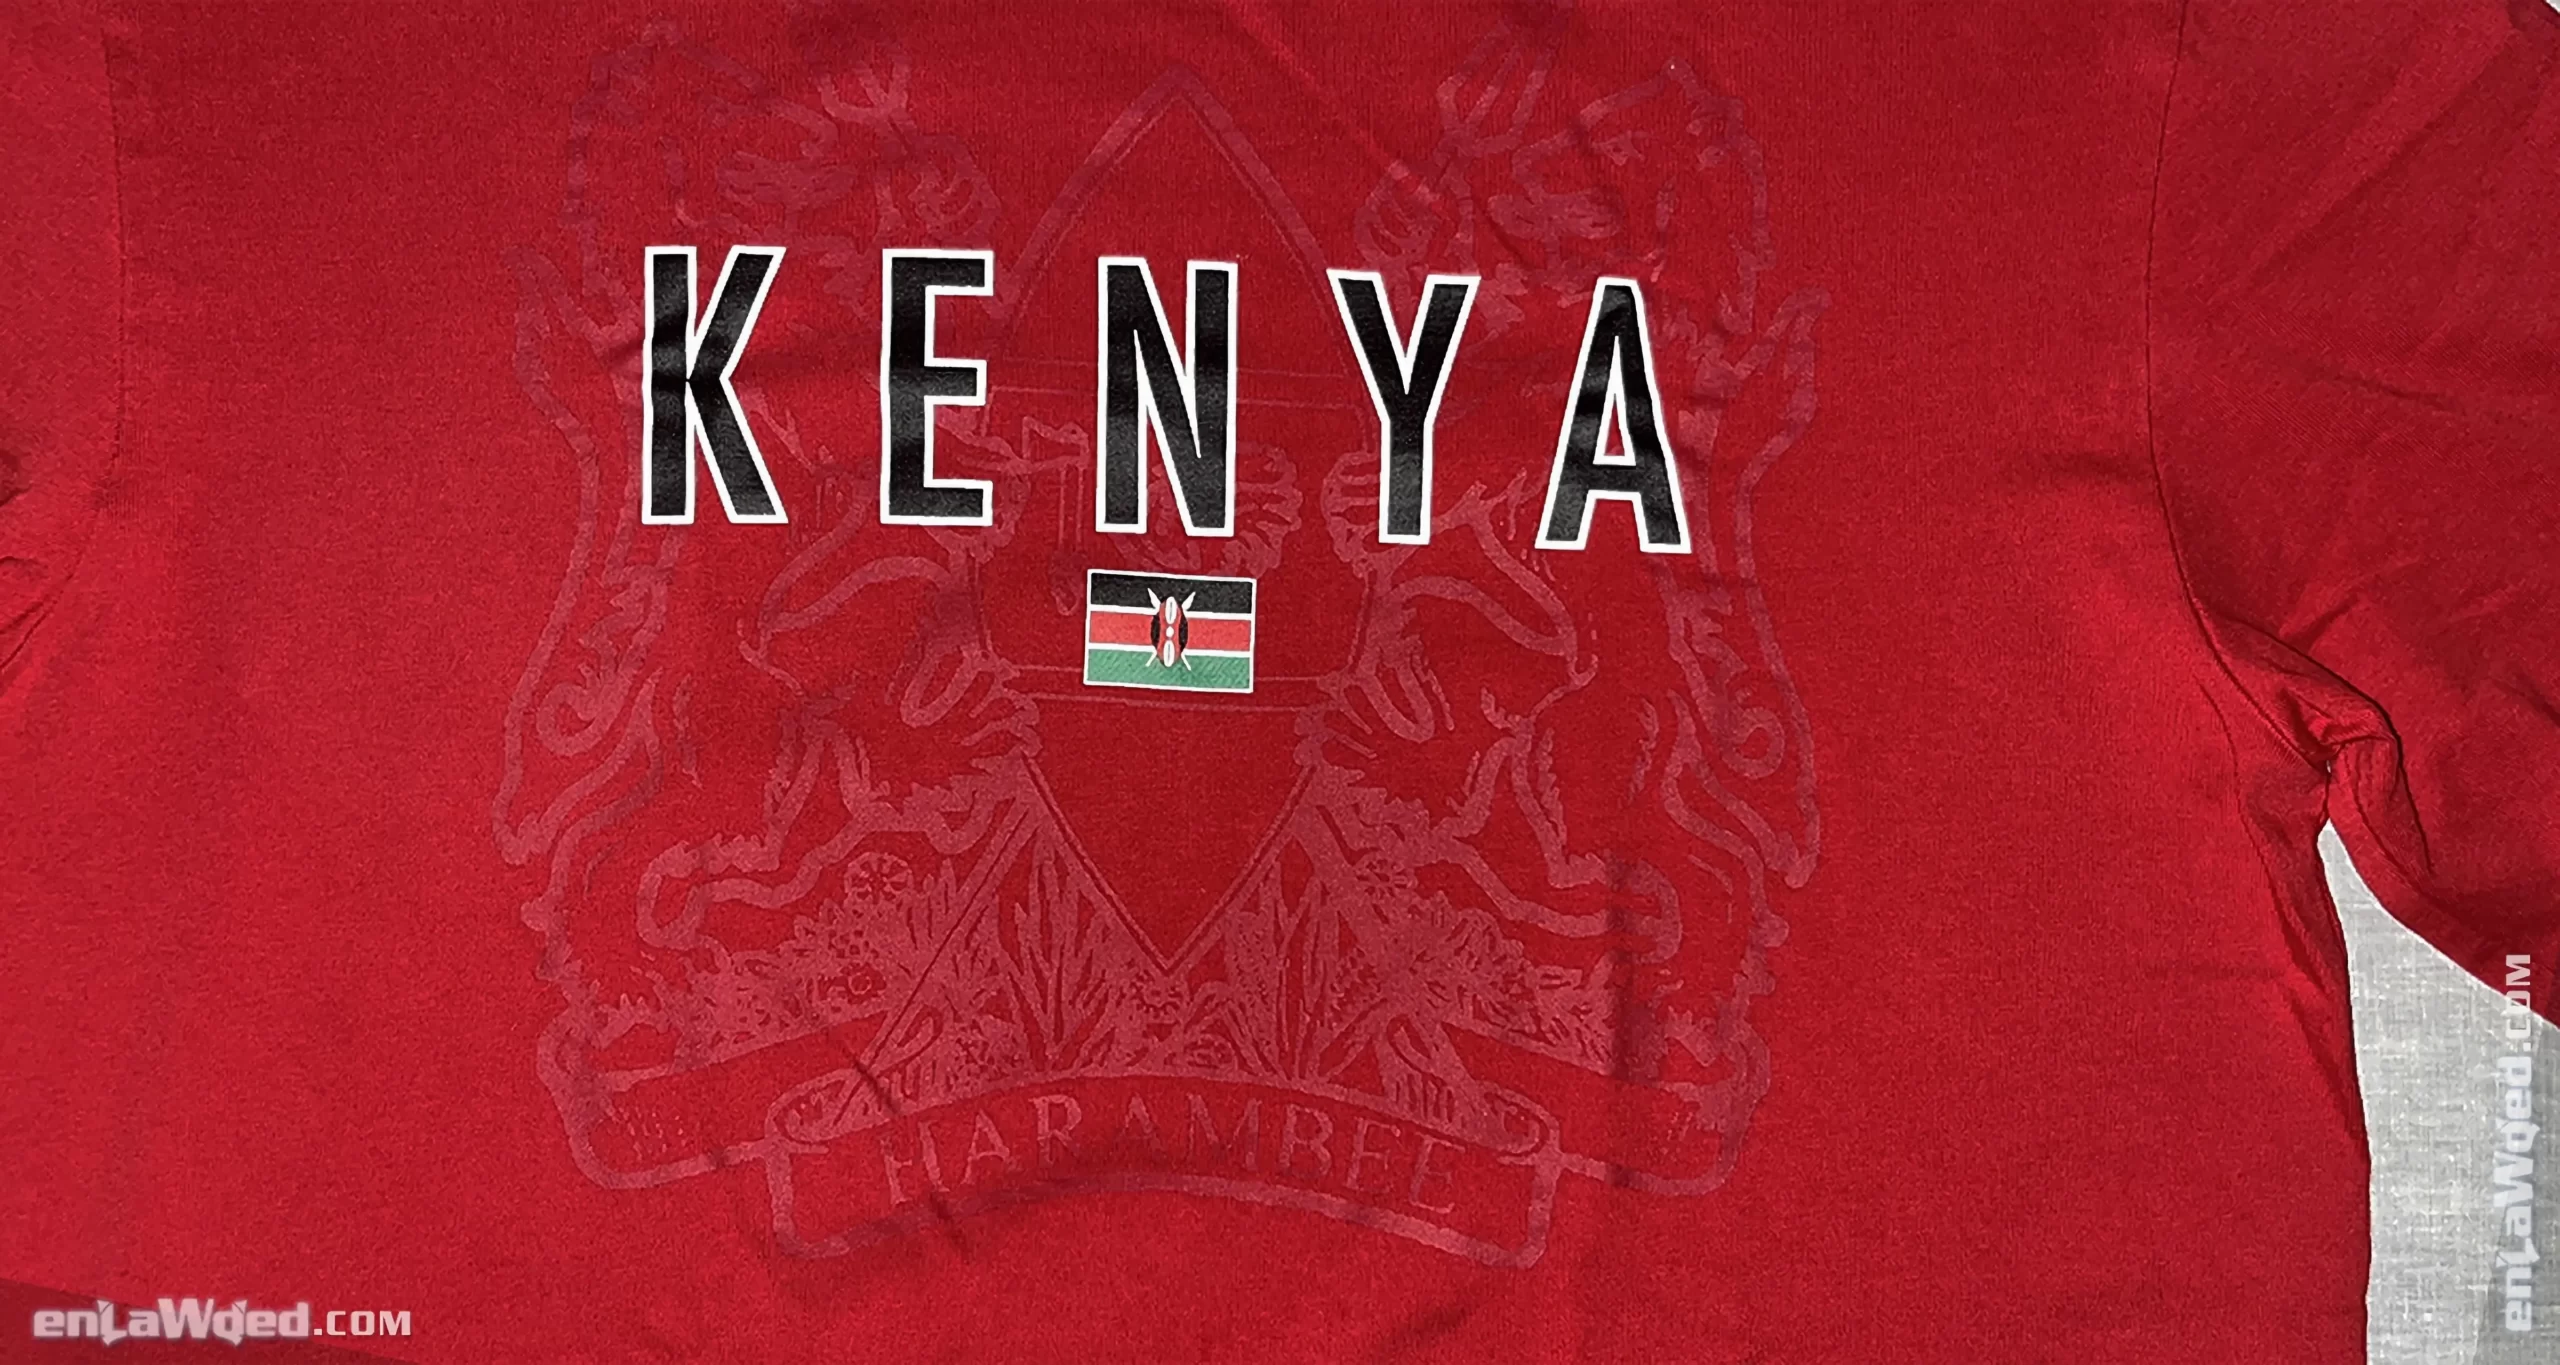 Men’s 2007 Kenya Harambee T-Shirt by Adidas Originals: Overnight (EnLawded.com file #lp1nbc8w126189rw17vf5mpm)